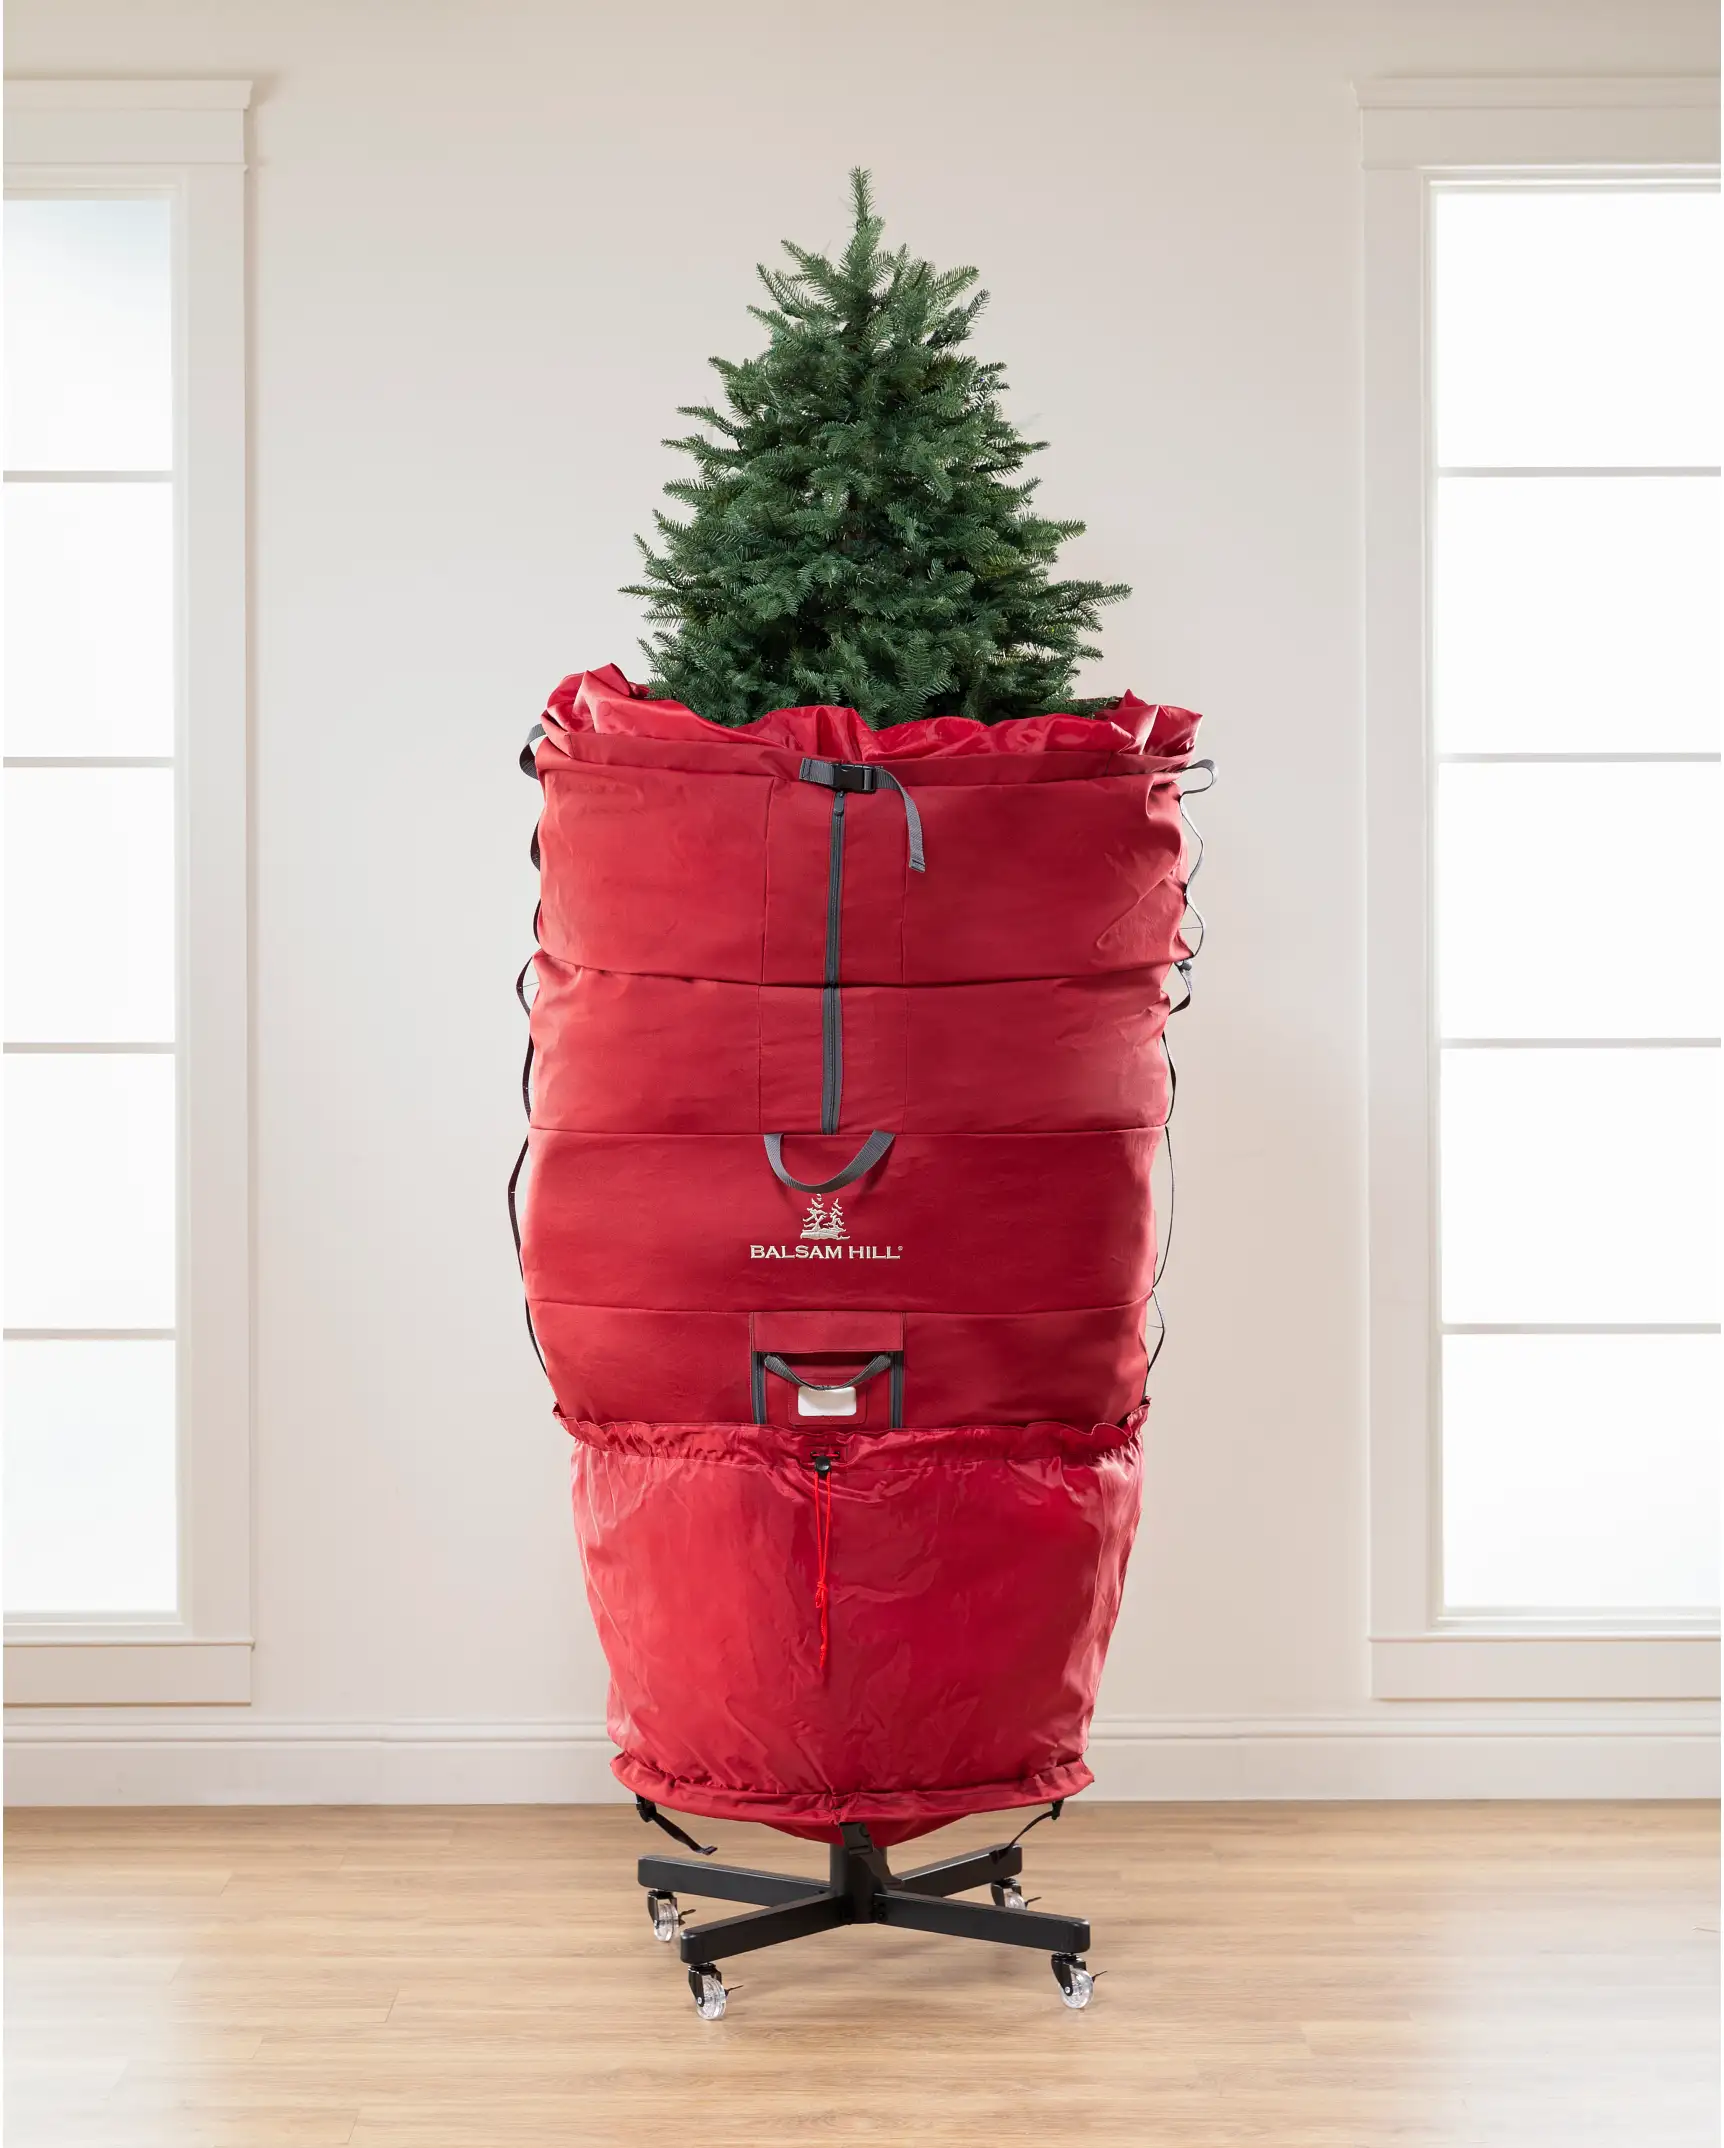 Where To Buy Christmas Tree Bags?